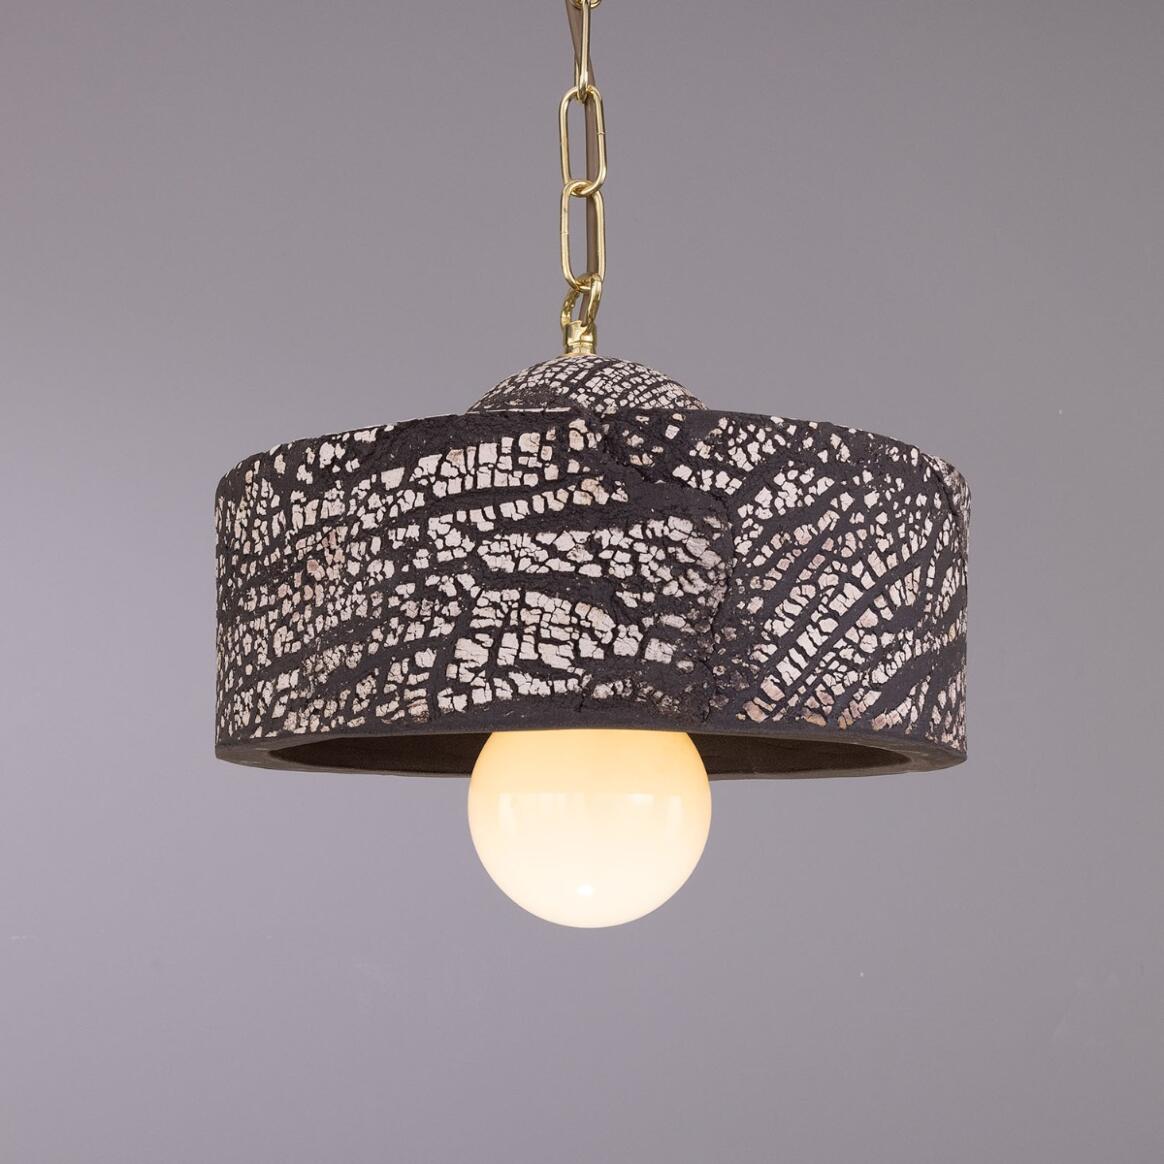 Seville ceramic mid-century modern pendant light, argile noire main product image